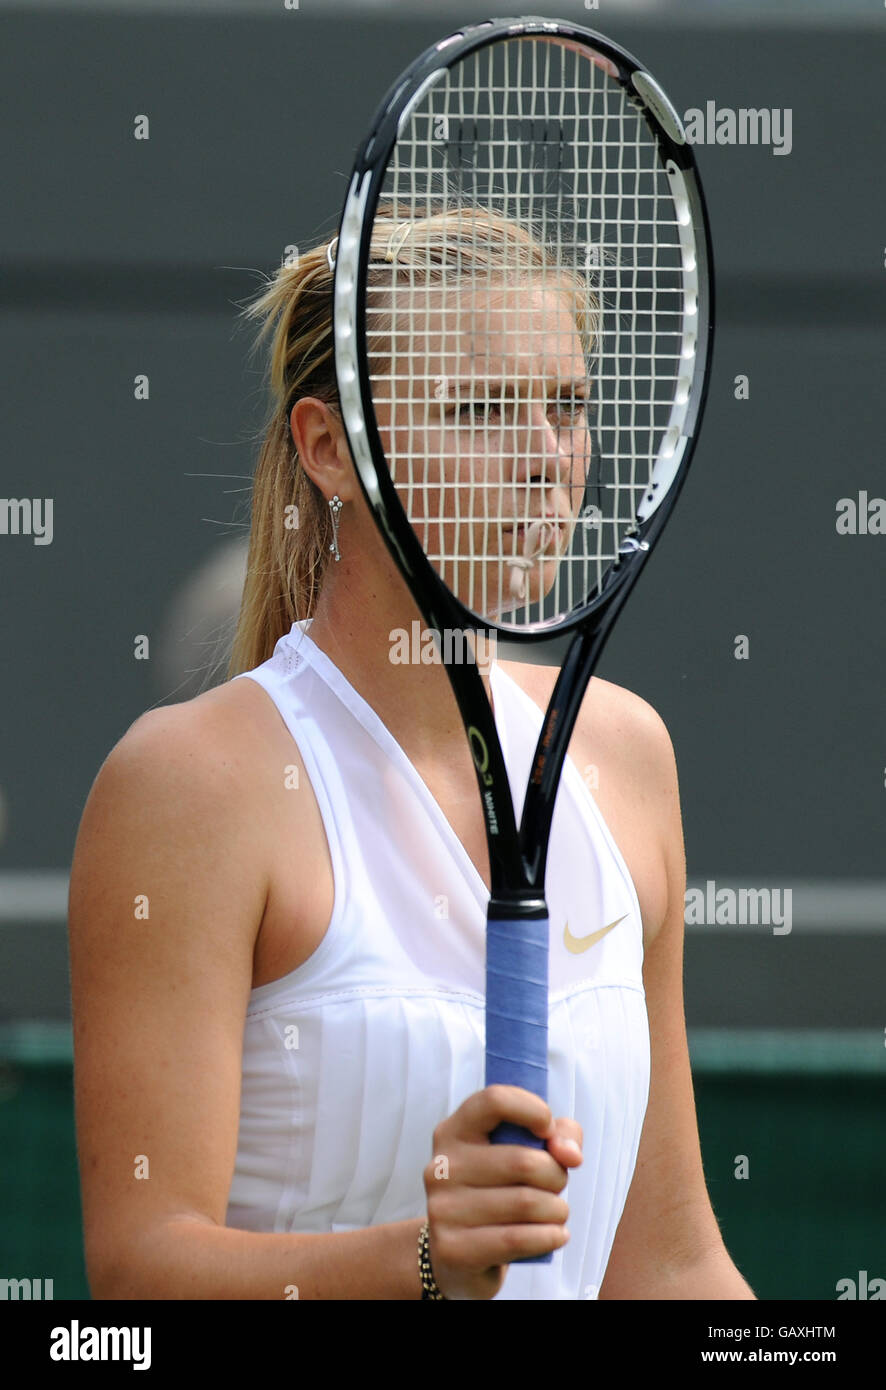 Tennis - Championnat de Wimbledon 2008 - deuxième jour - le All England Club.Maria Sharapova en Russie pendant les championnats de Wimbledon 2008 au All England tennis Club Banque D'Images